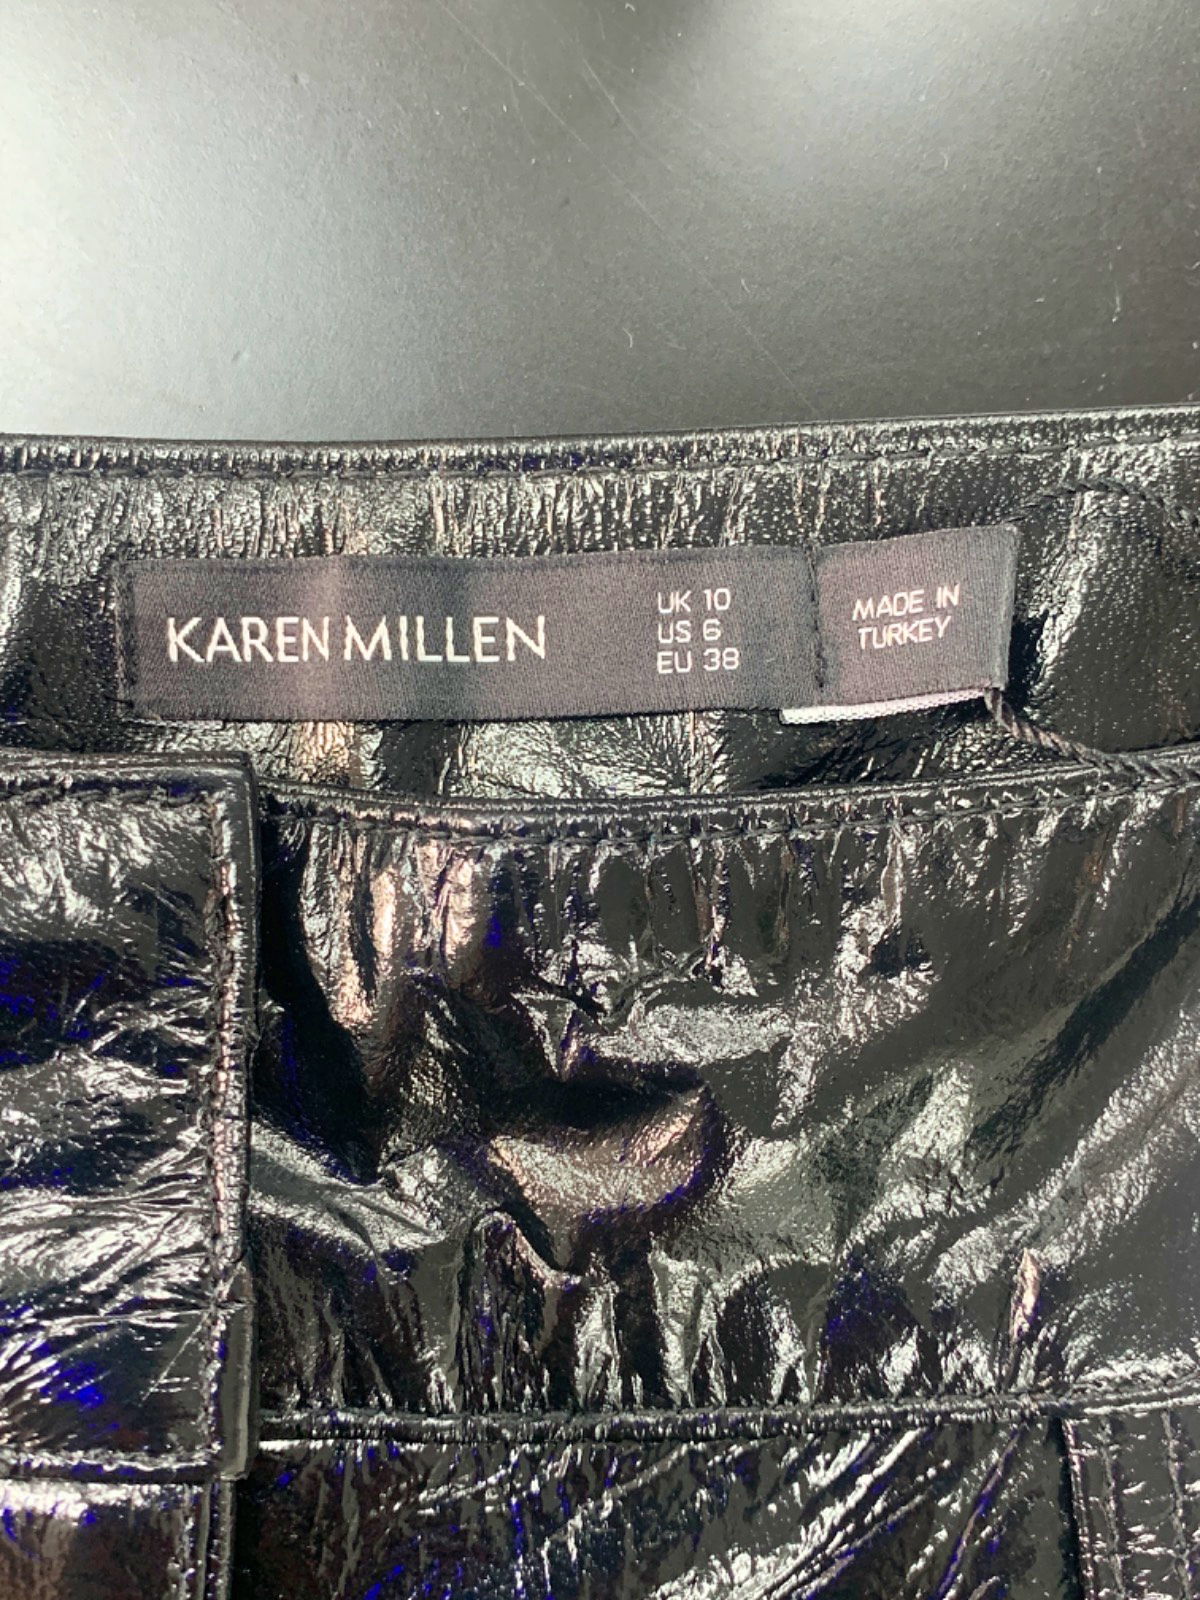 Karen Millen Black Patent Leather Low Rise Shorts UK 10